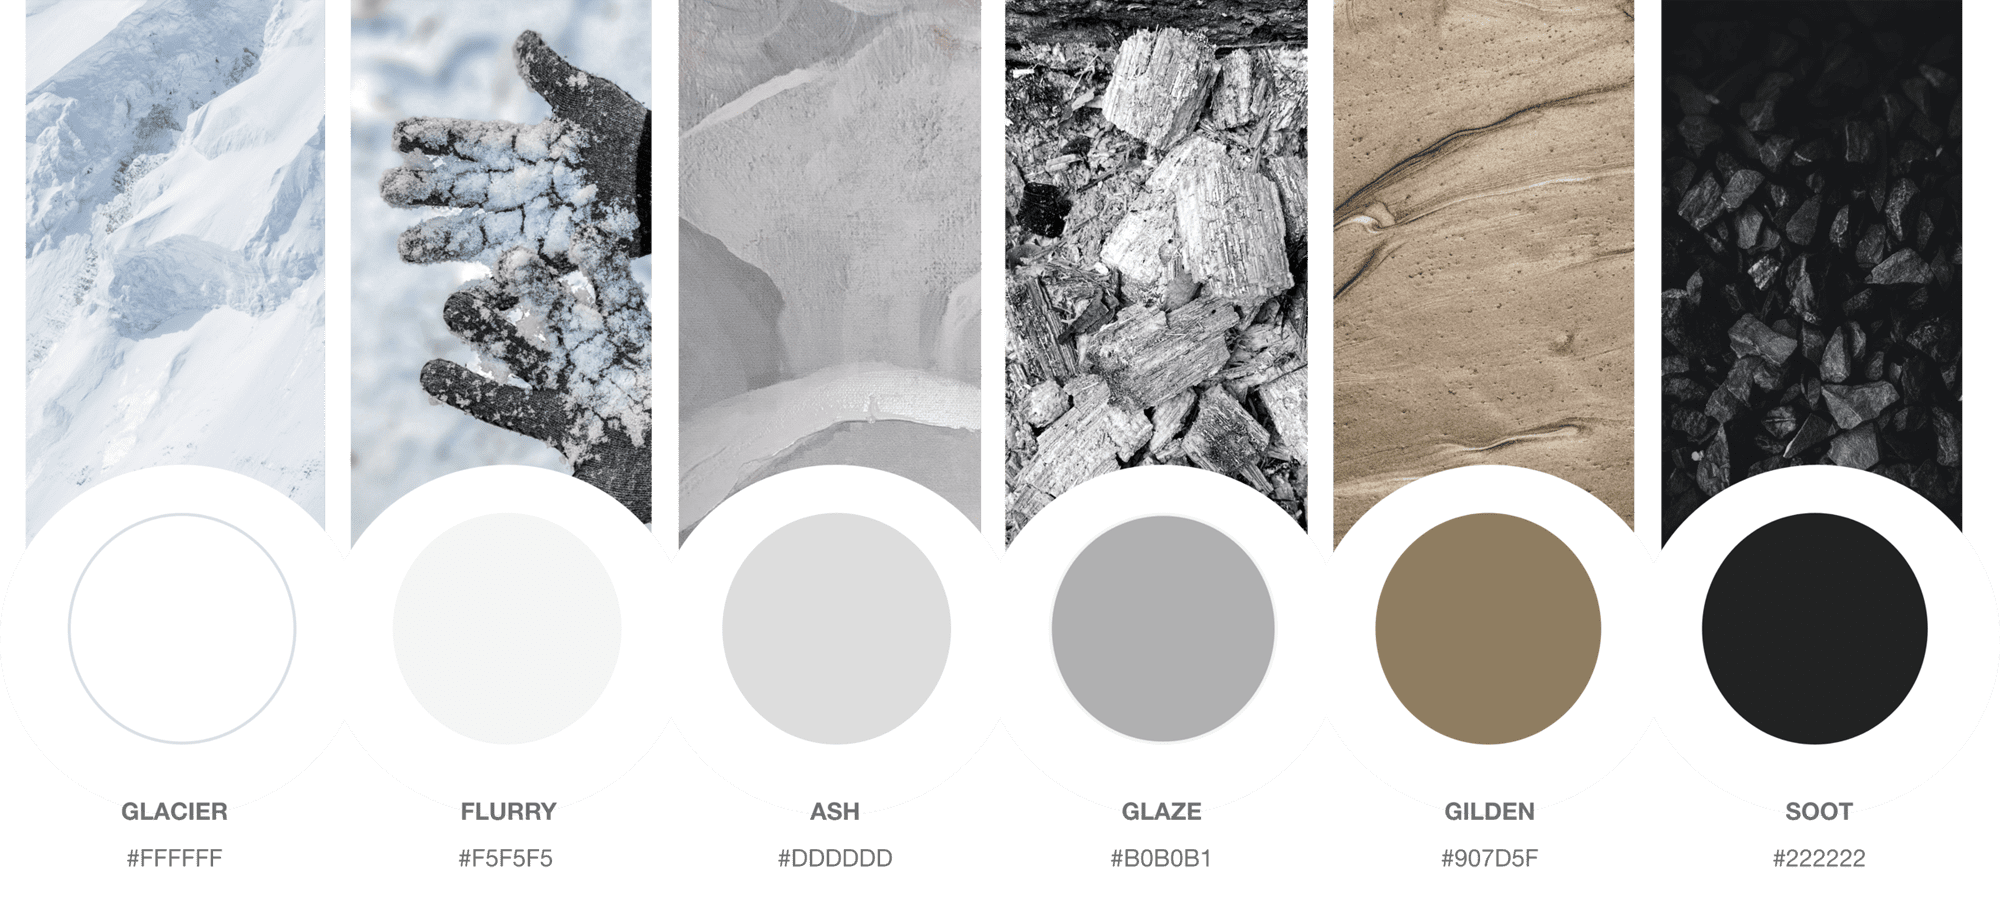 Color palette used for Bigfoot RV website, from left to right - Glacier #FFFFFF, Flurry #F5F5F5, Ash #DDDDDD, Glaze #B0B0B1, Gilden #907D5F, and Soot #222222